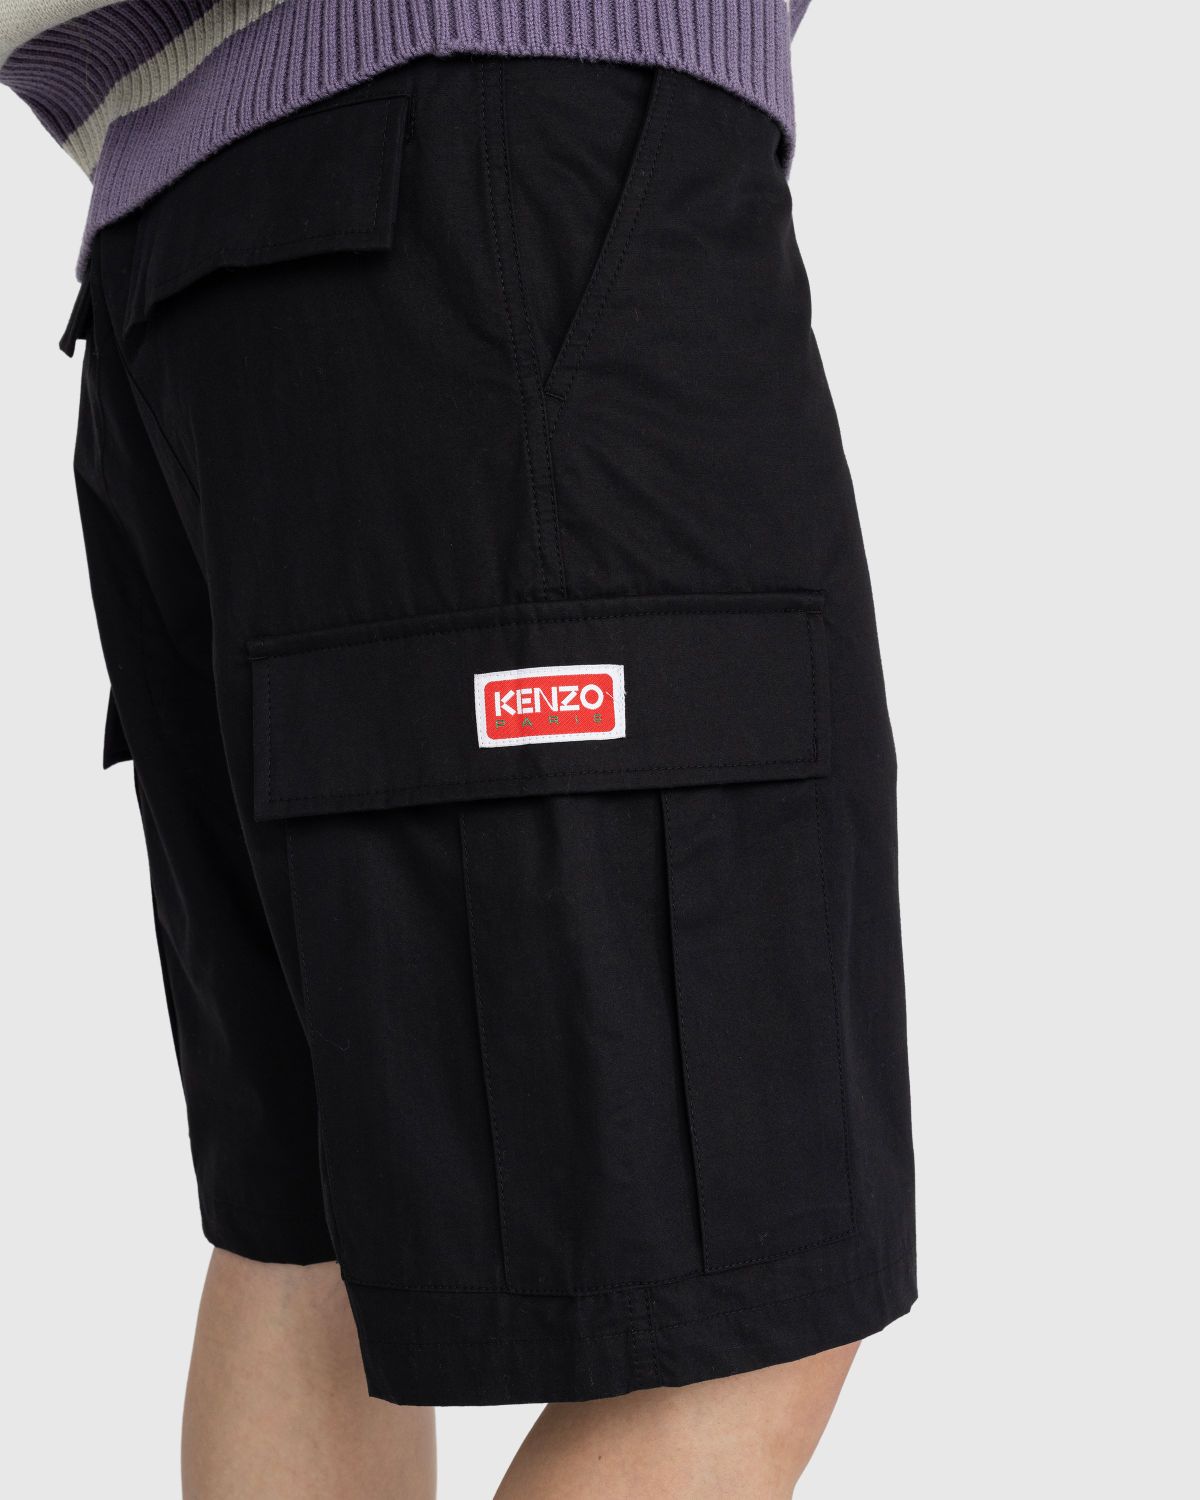 Kenzo – Cargo Shorts - Short Cuts - Black - Image 5